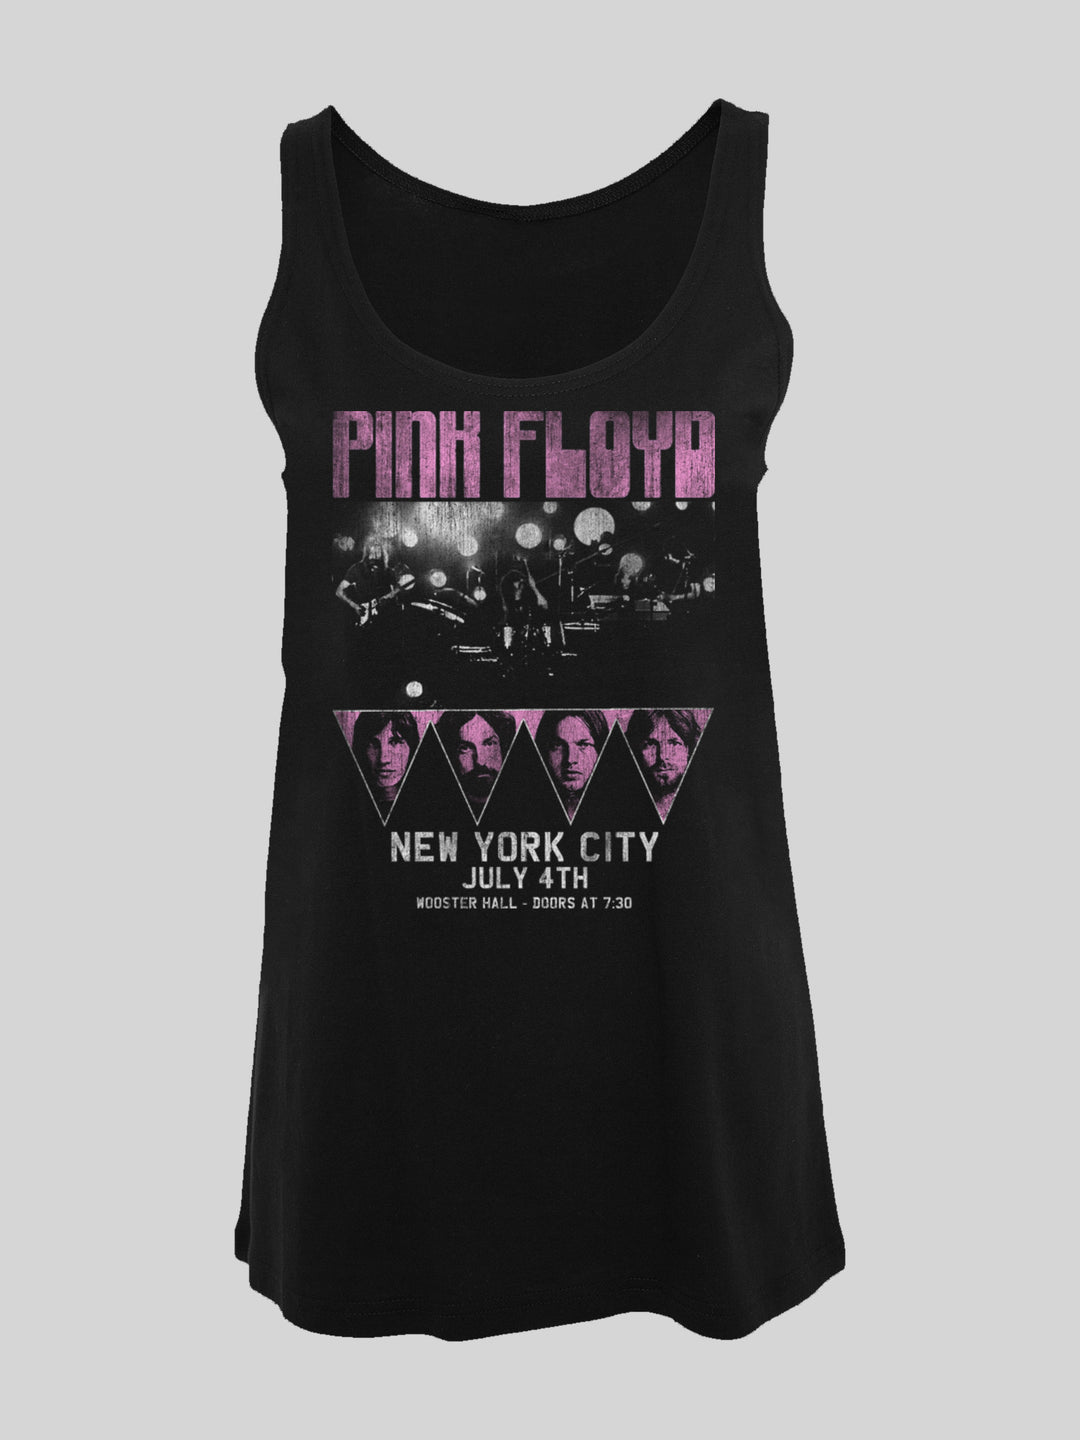 Pink-Floyd-Tour-NYC with Ladies Tanktop